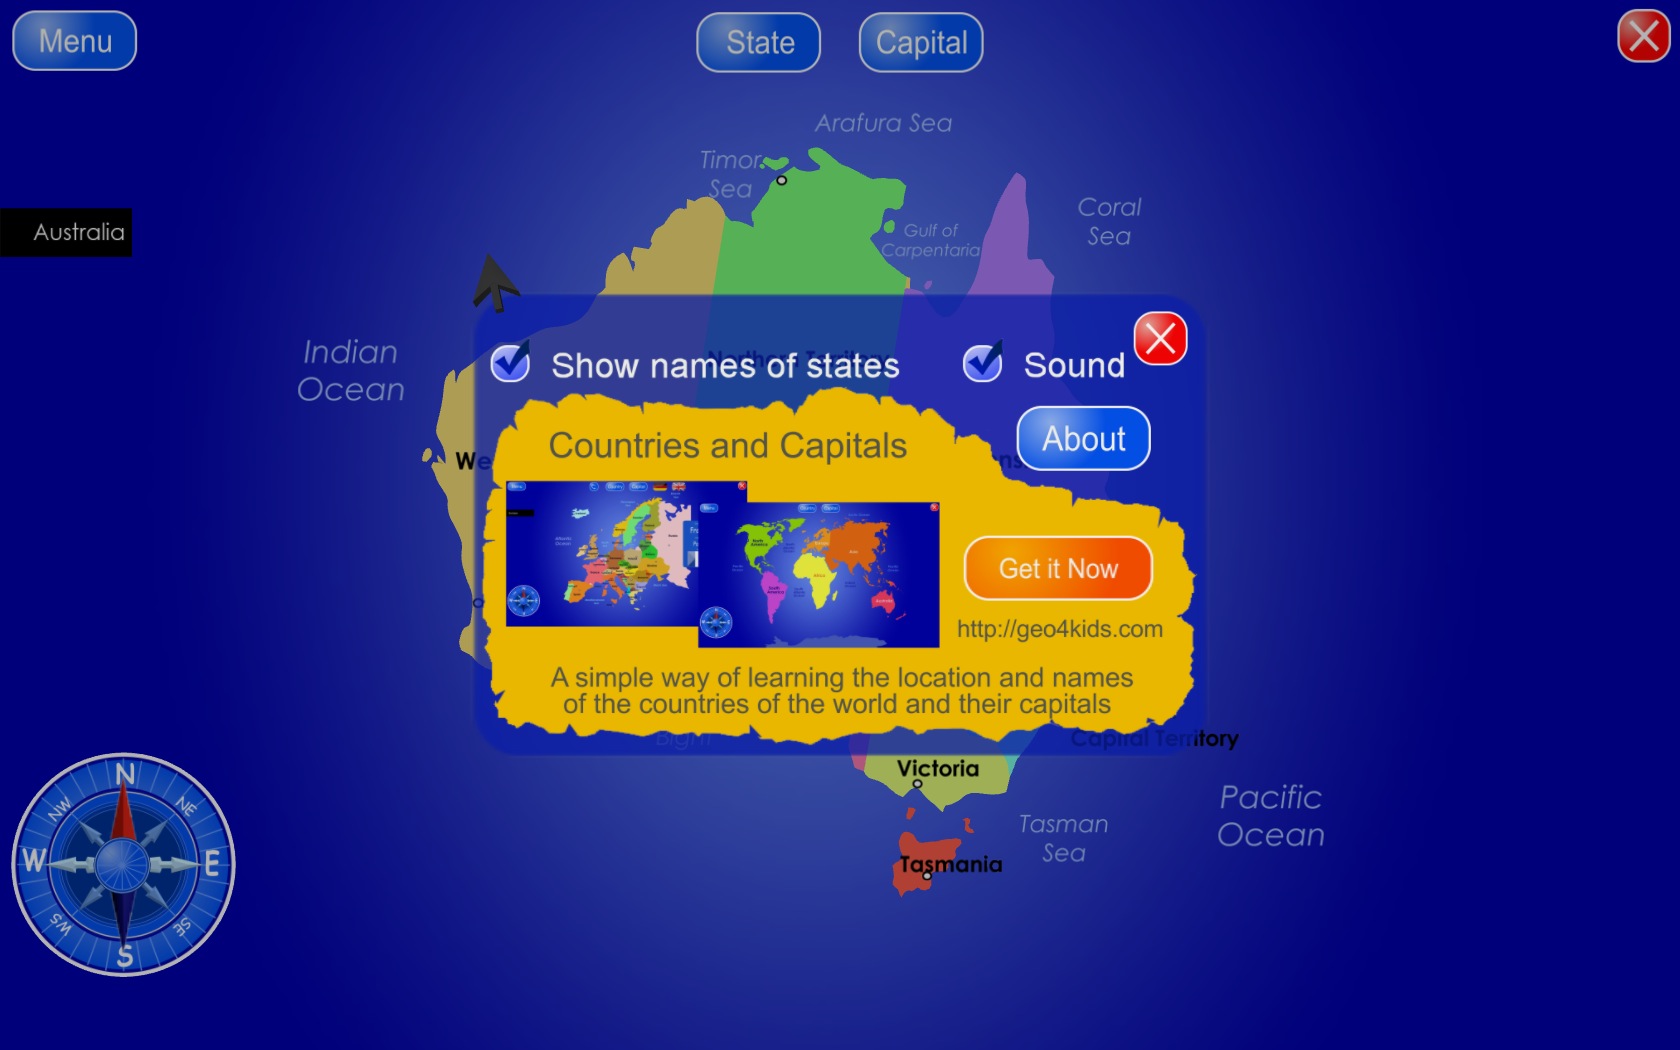 States and Territories of Australia 1.0 : Settings